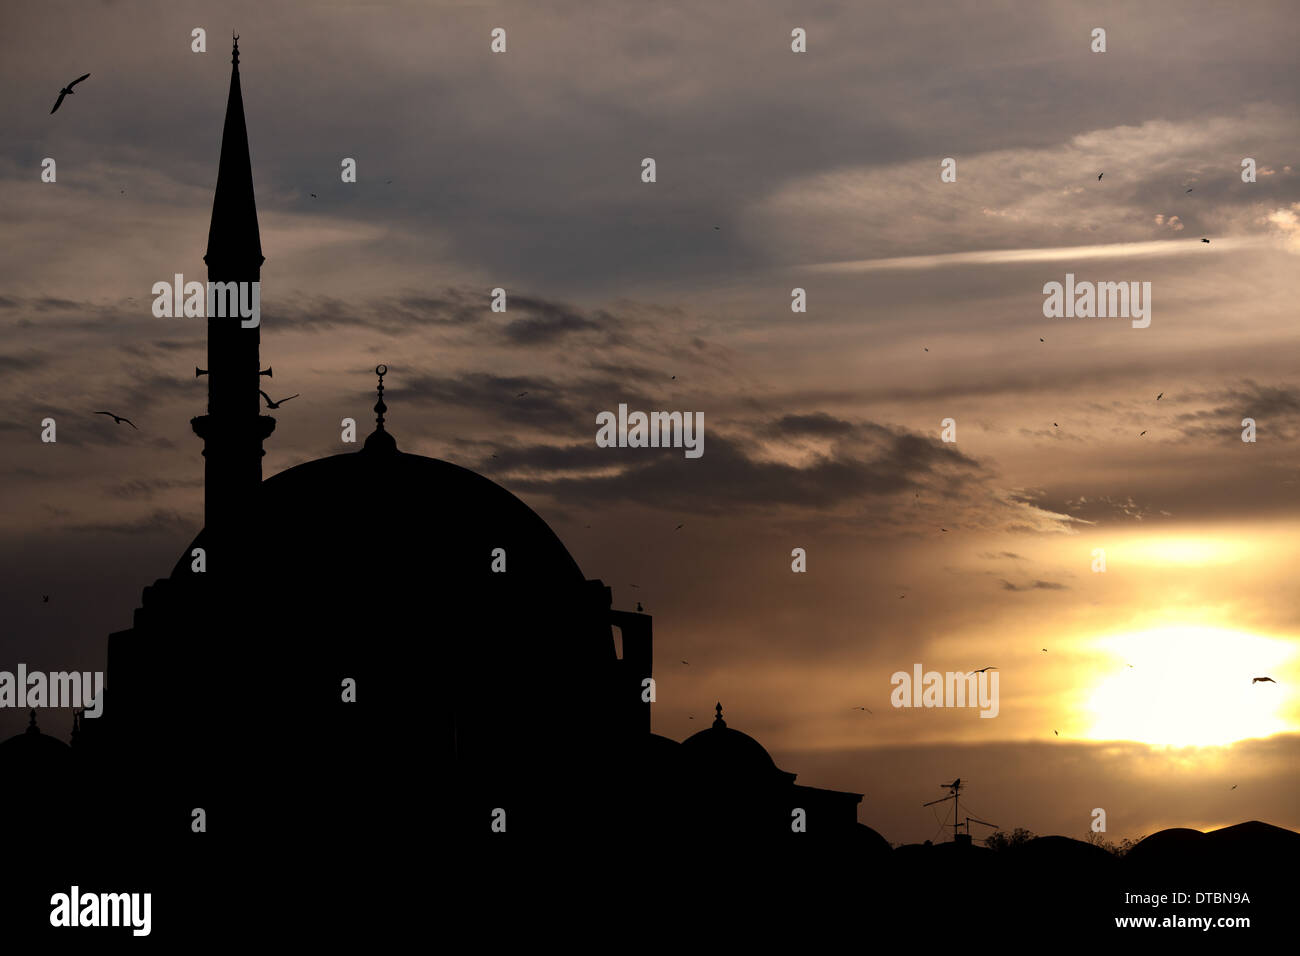 Silhouette of the Rustem Pasha Mosque Stock Photo